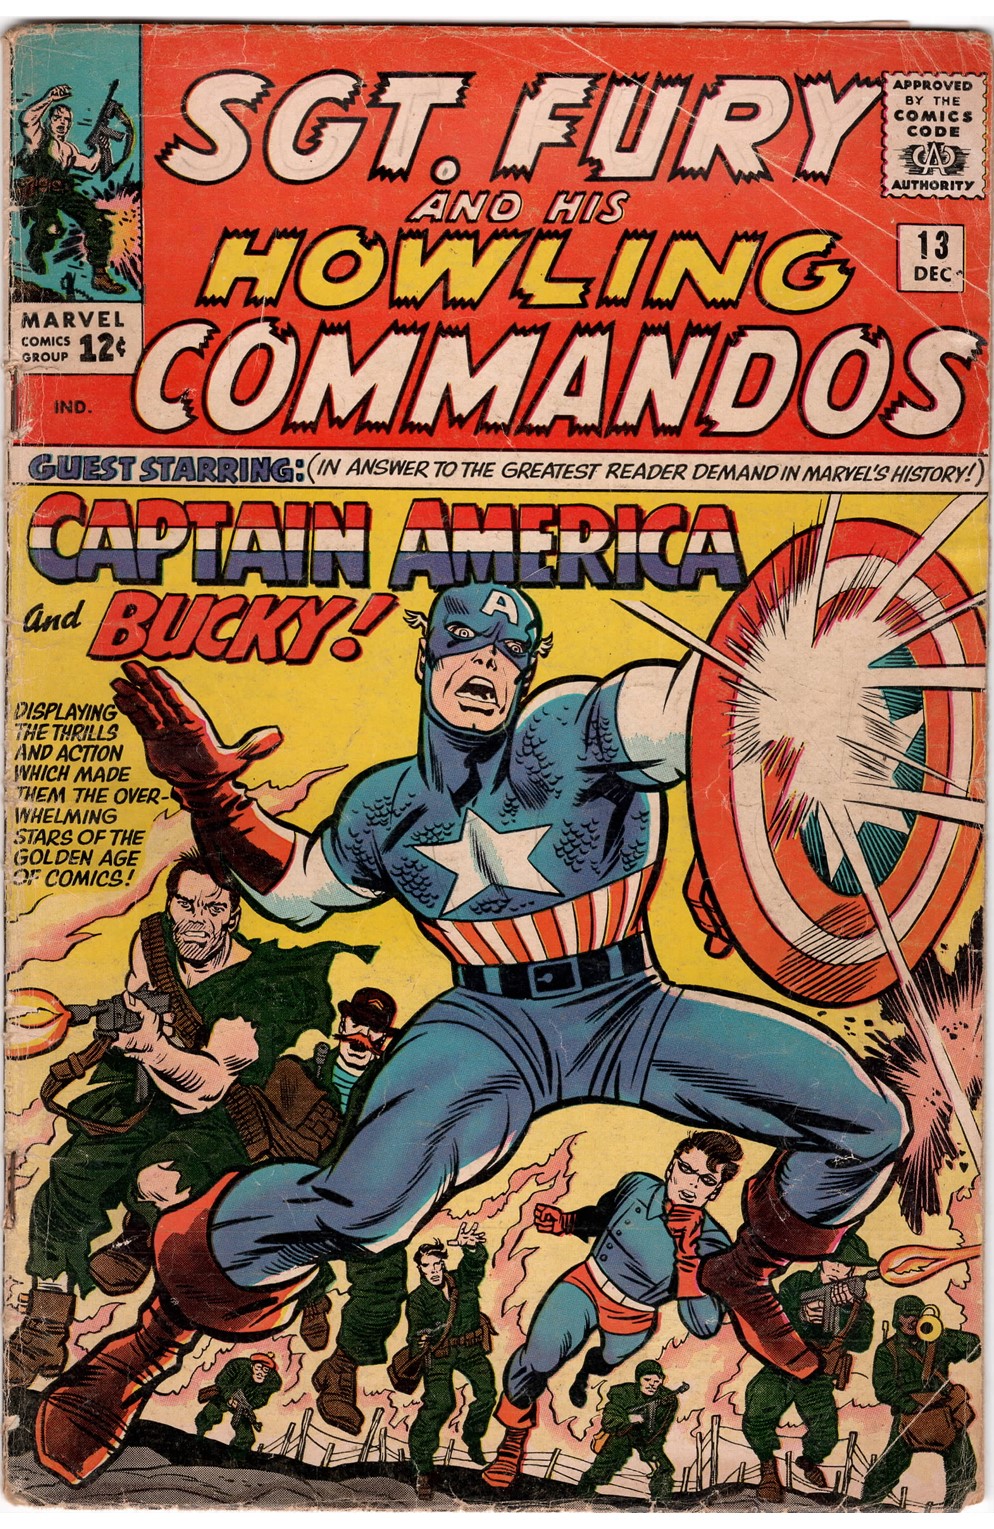 Sgt Fury (& His Howling Commandos) #13